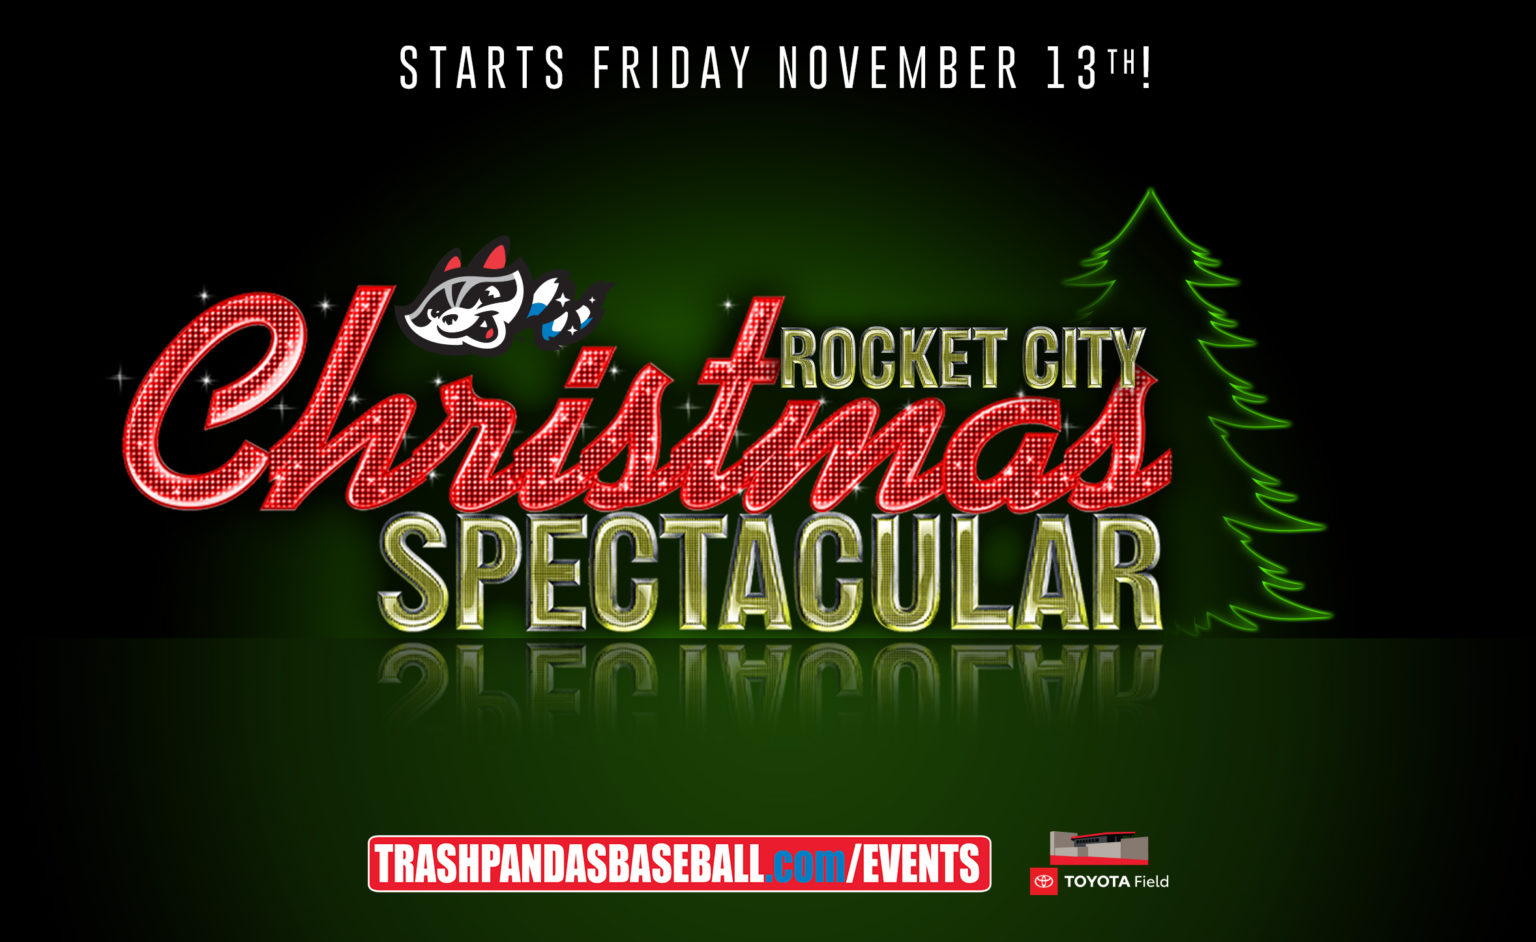 Trash Pandas’ Rocket City Christmas Spectacular event starts Nov. 13